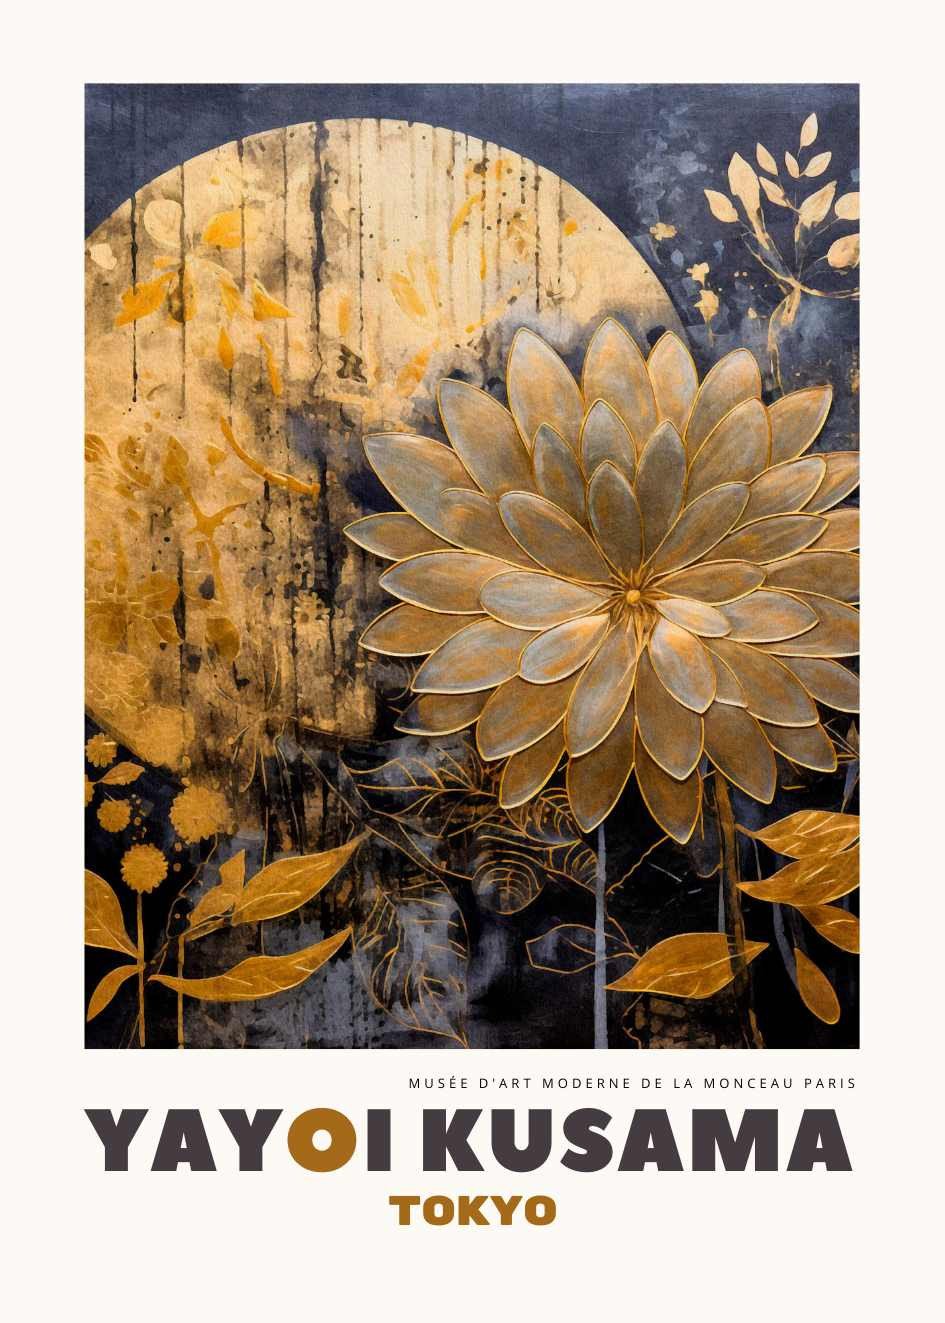 Plakat Yayoi Kusama №34 Gold